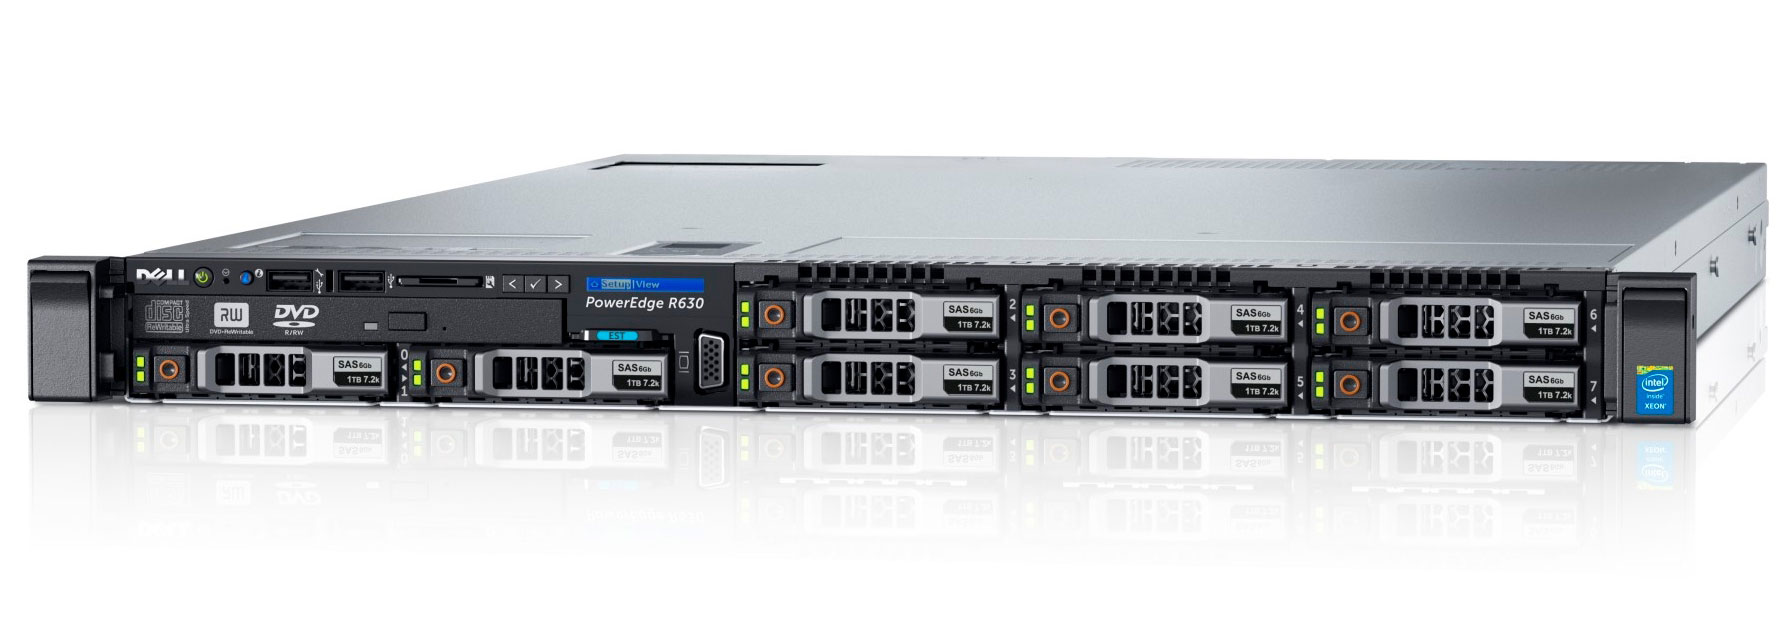 Подробное фото Сервер DELL PowerEdge R630 2x Xeon E5-2683v3 128Gb 2133P DDR4 8x noHDD 2.5", SAS RAID Perc H730, 1024Mb, DVD, 2*PSU